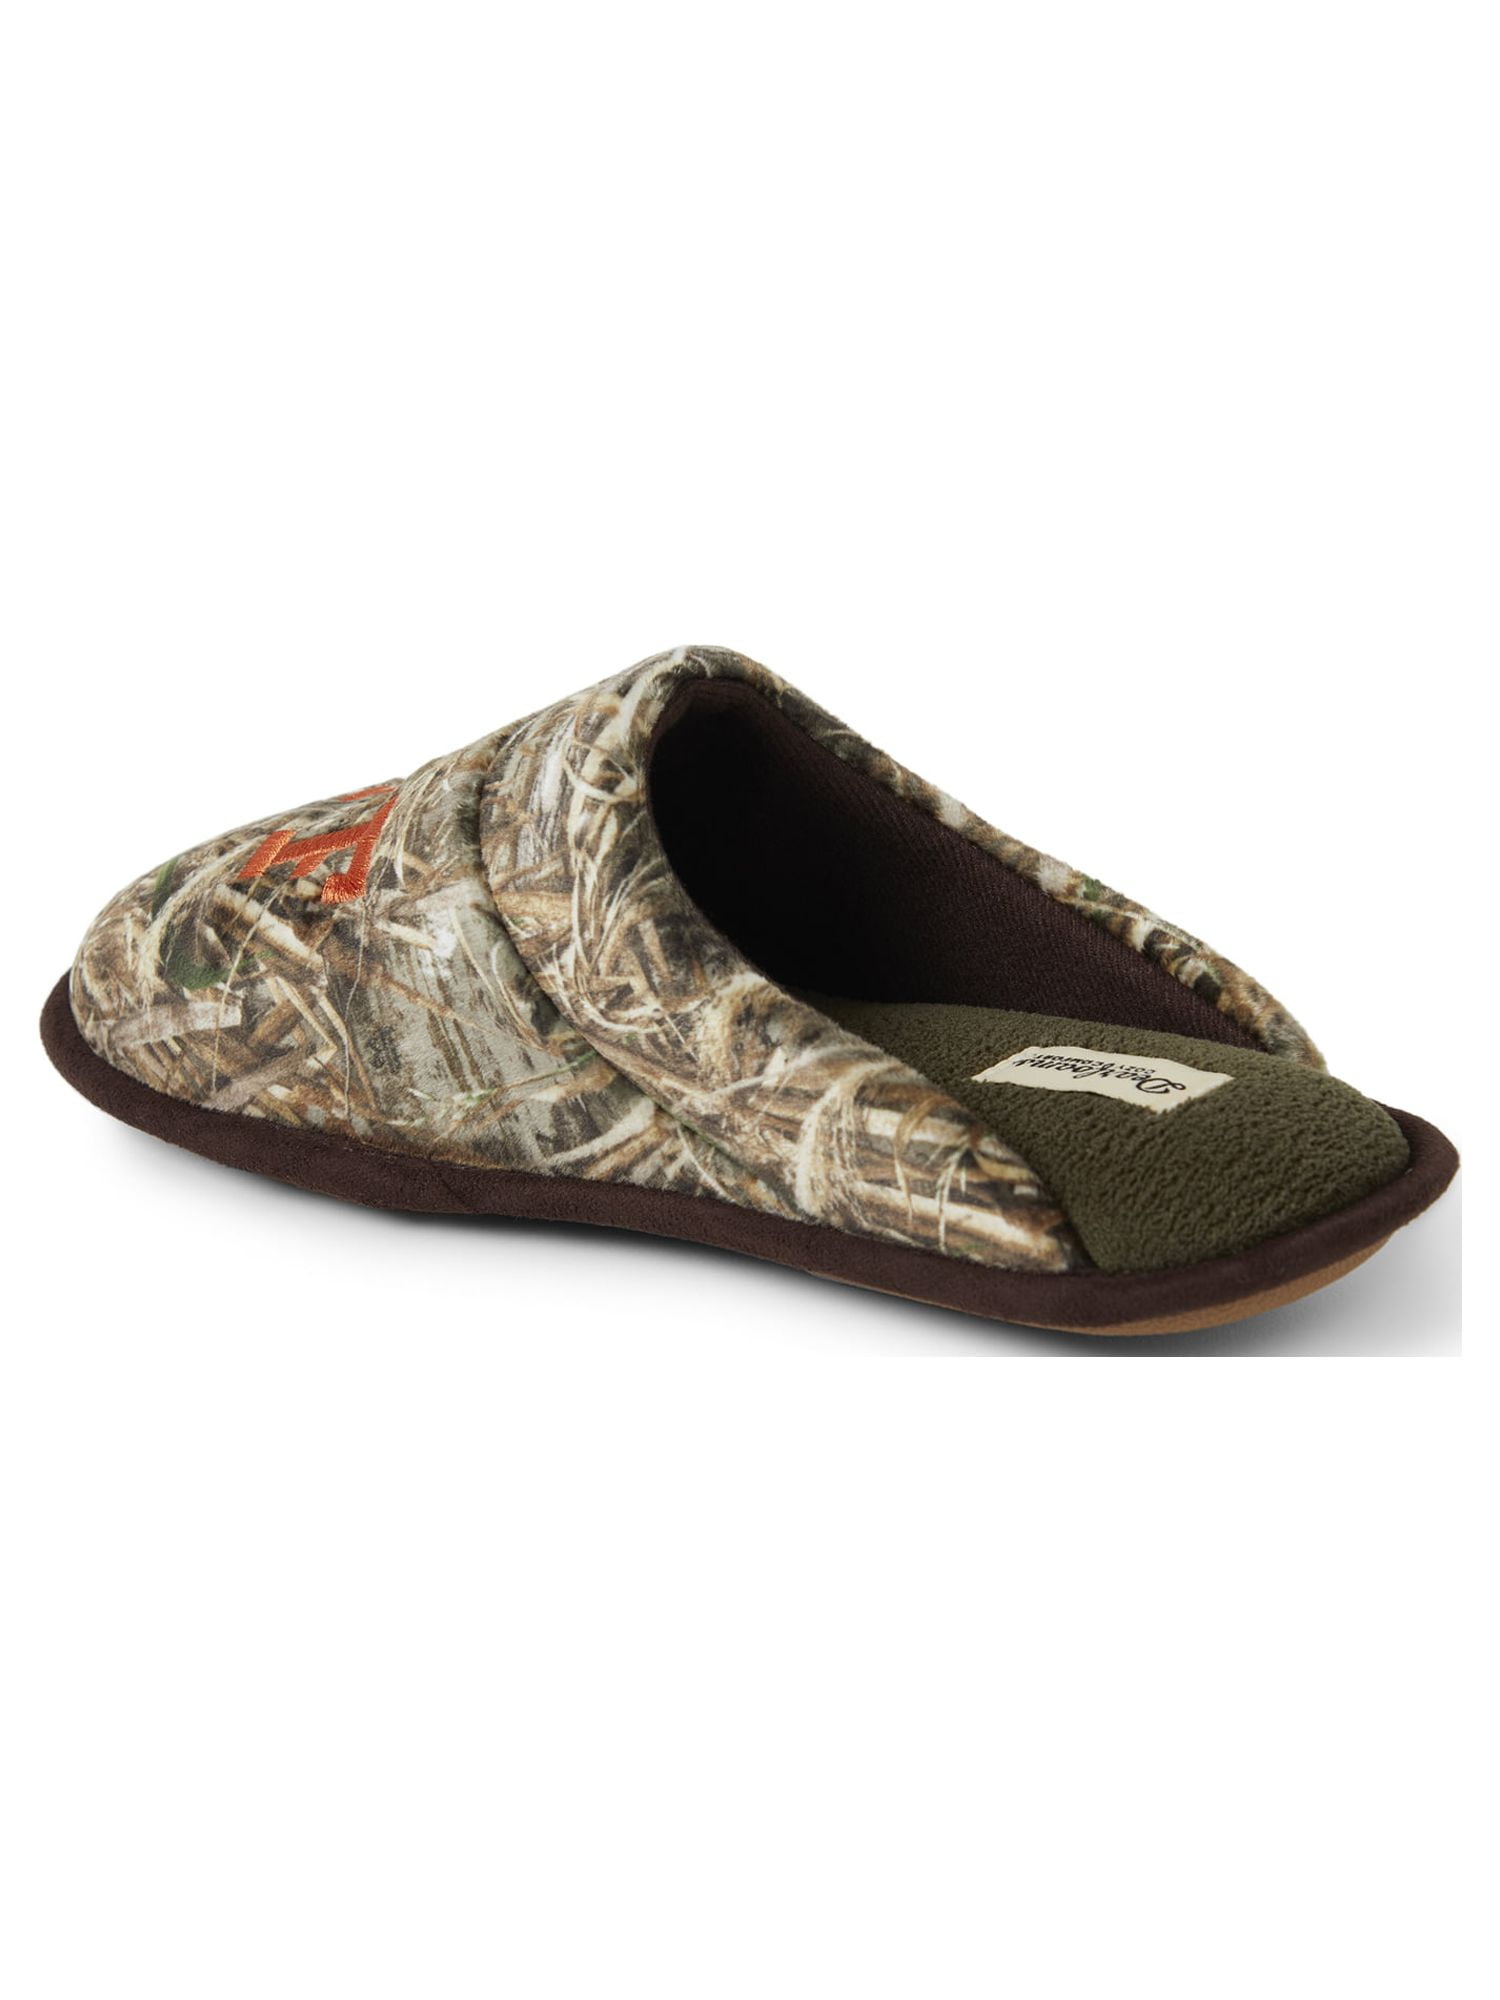 Zizor Mens Comfy Moccasin Slippers Drop Heel Memory Foam House Shoes Suede  Loafer Slippers - Walmart.com